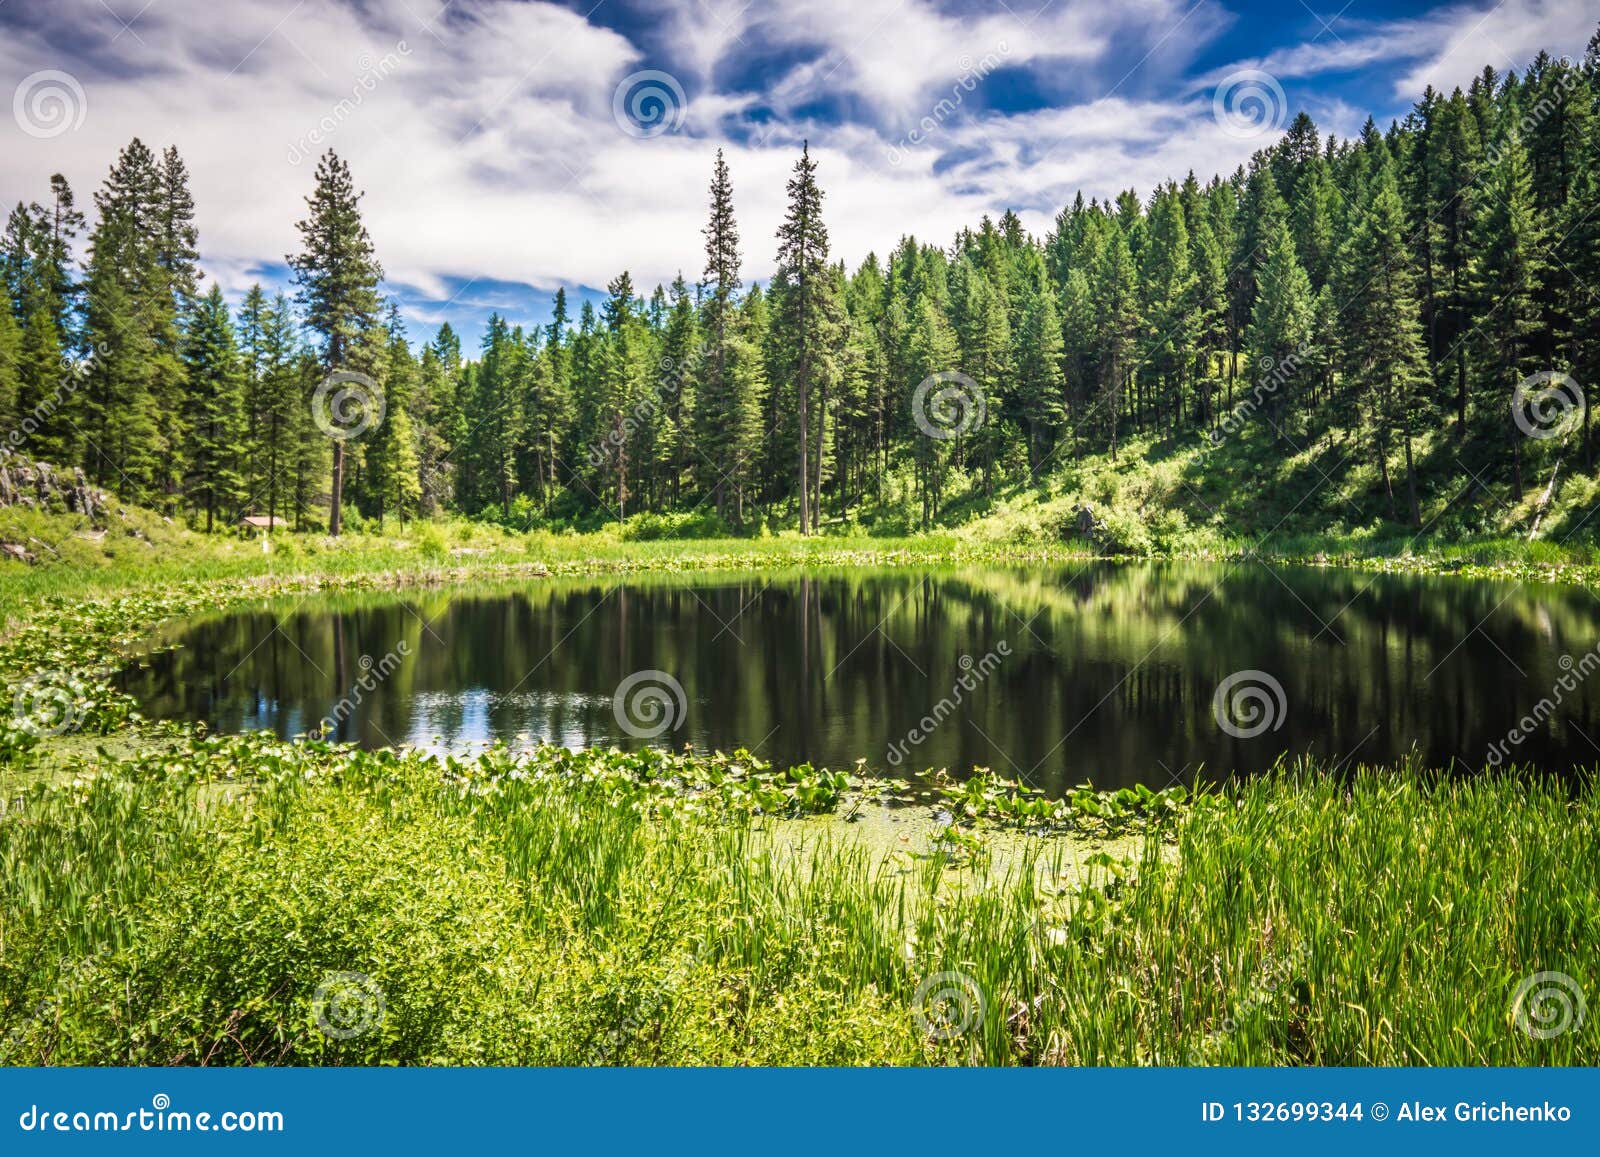 nature scenics around spokane river washington